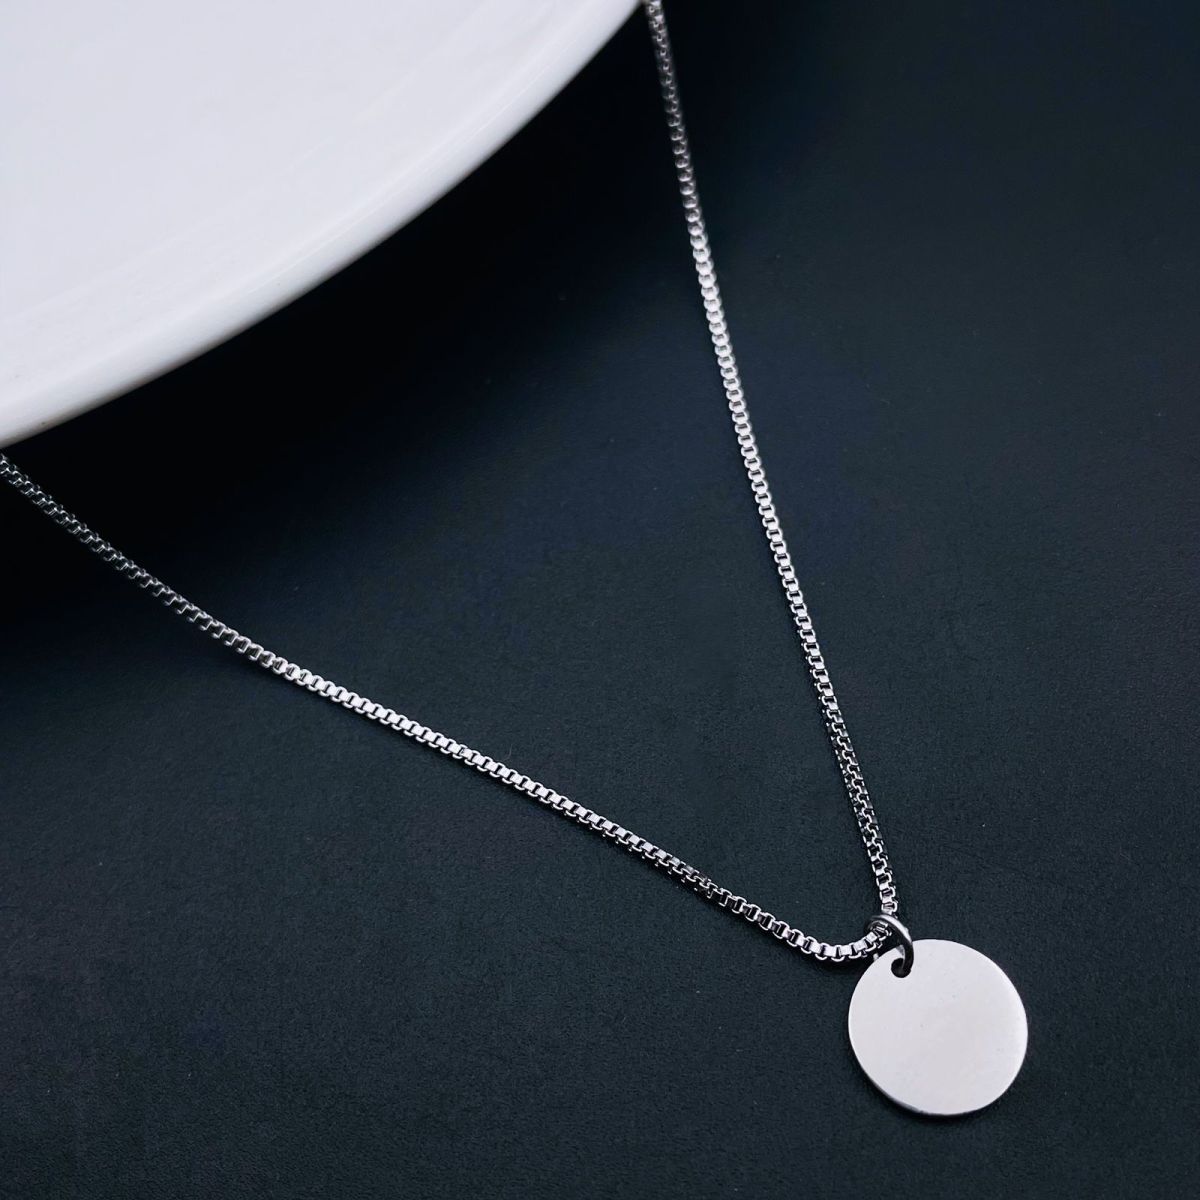 Copper Silver Medallion Charm necklace Pendant Chain for Women